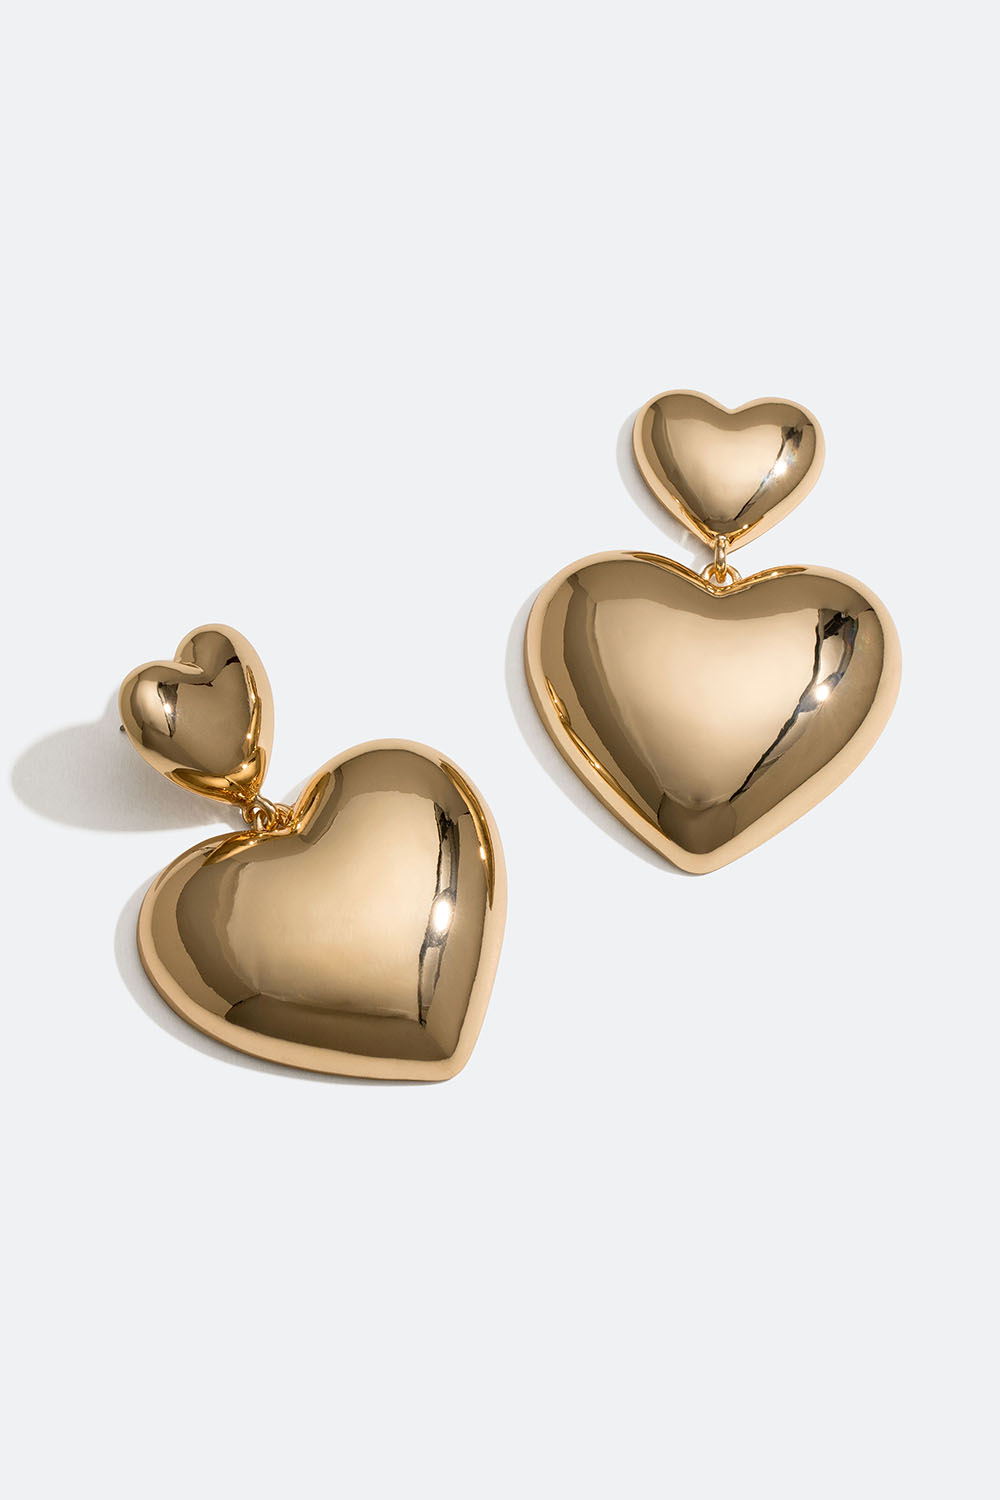 Store guldfarvede øreringe med hjerter i gruppen Smykker / Øreringe hos Glitter (253005632002)